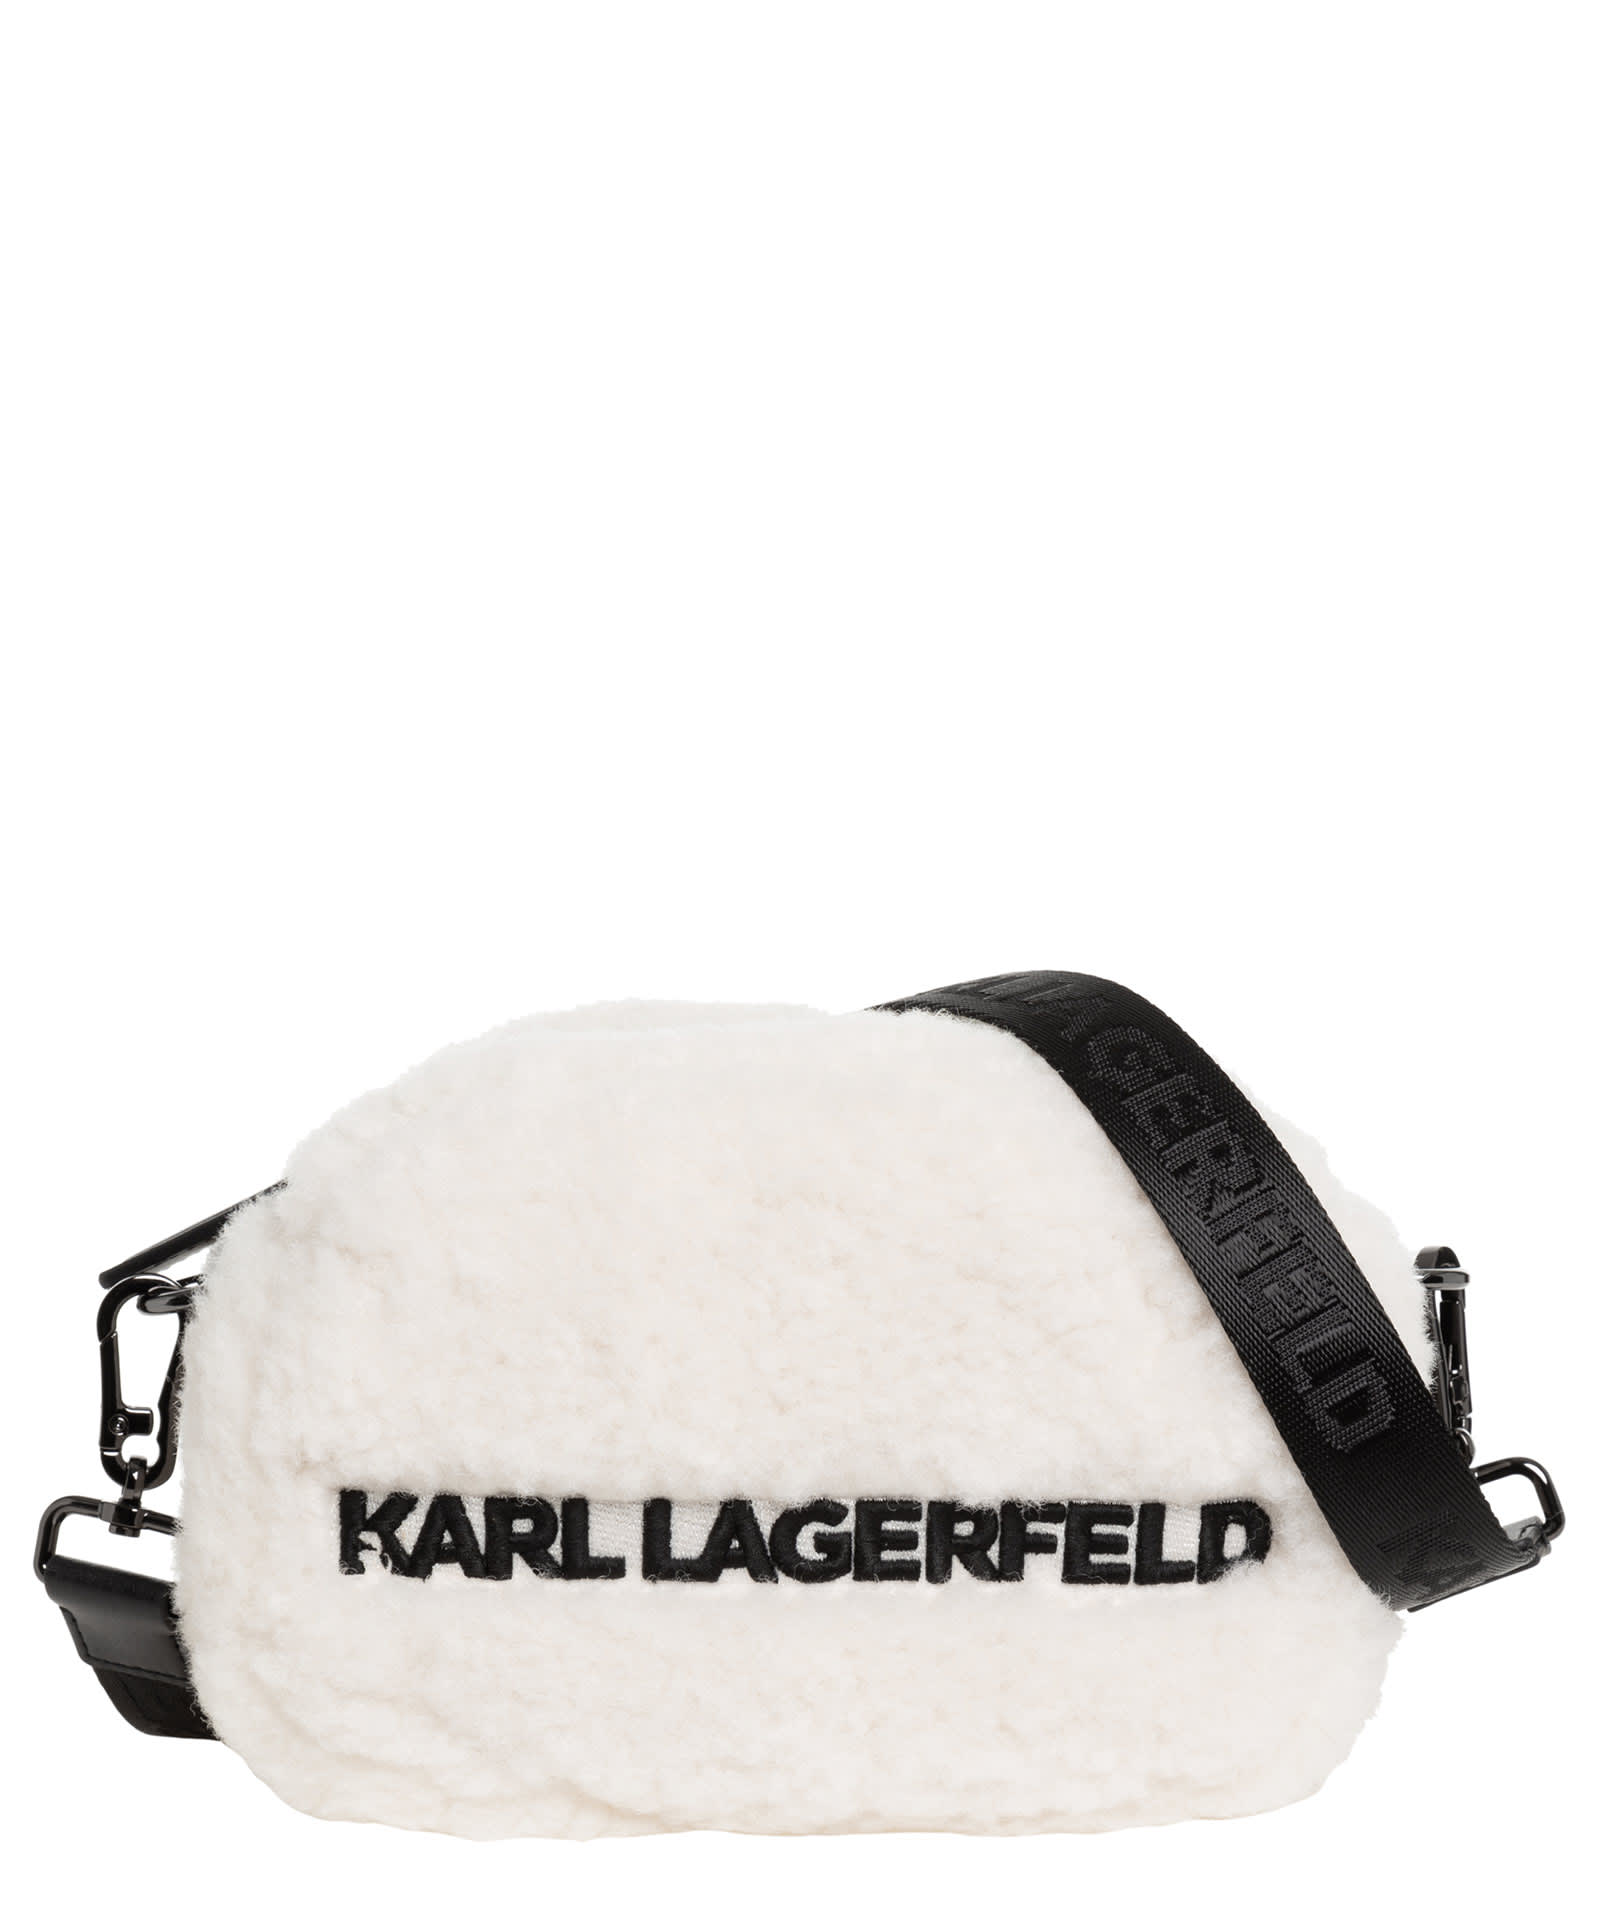 Karl Lagerfeld Cara Loves Karl Cara Loves Karl Crossbody Bag